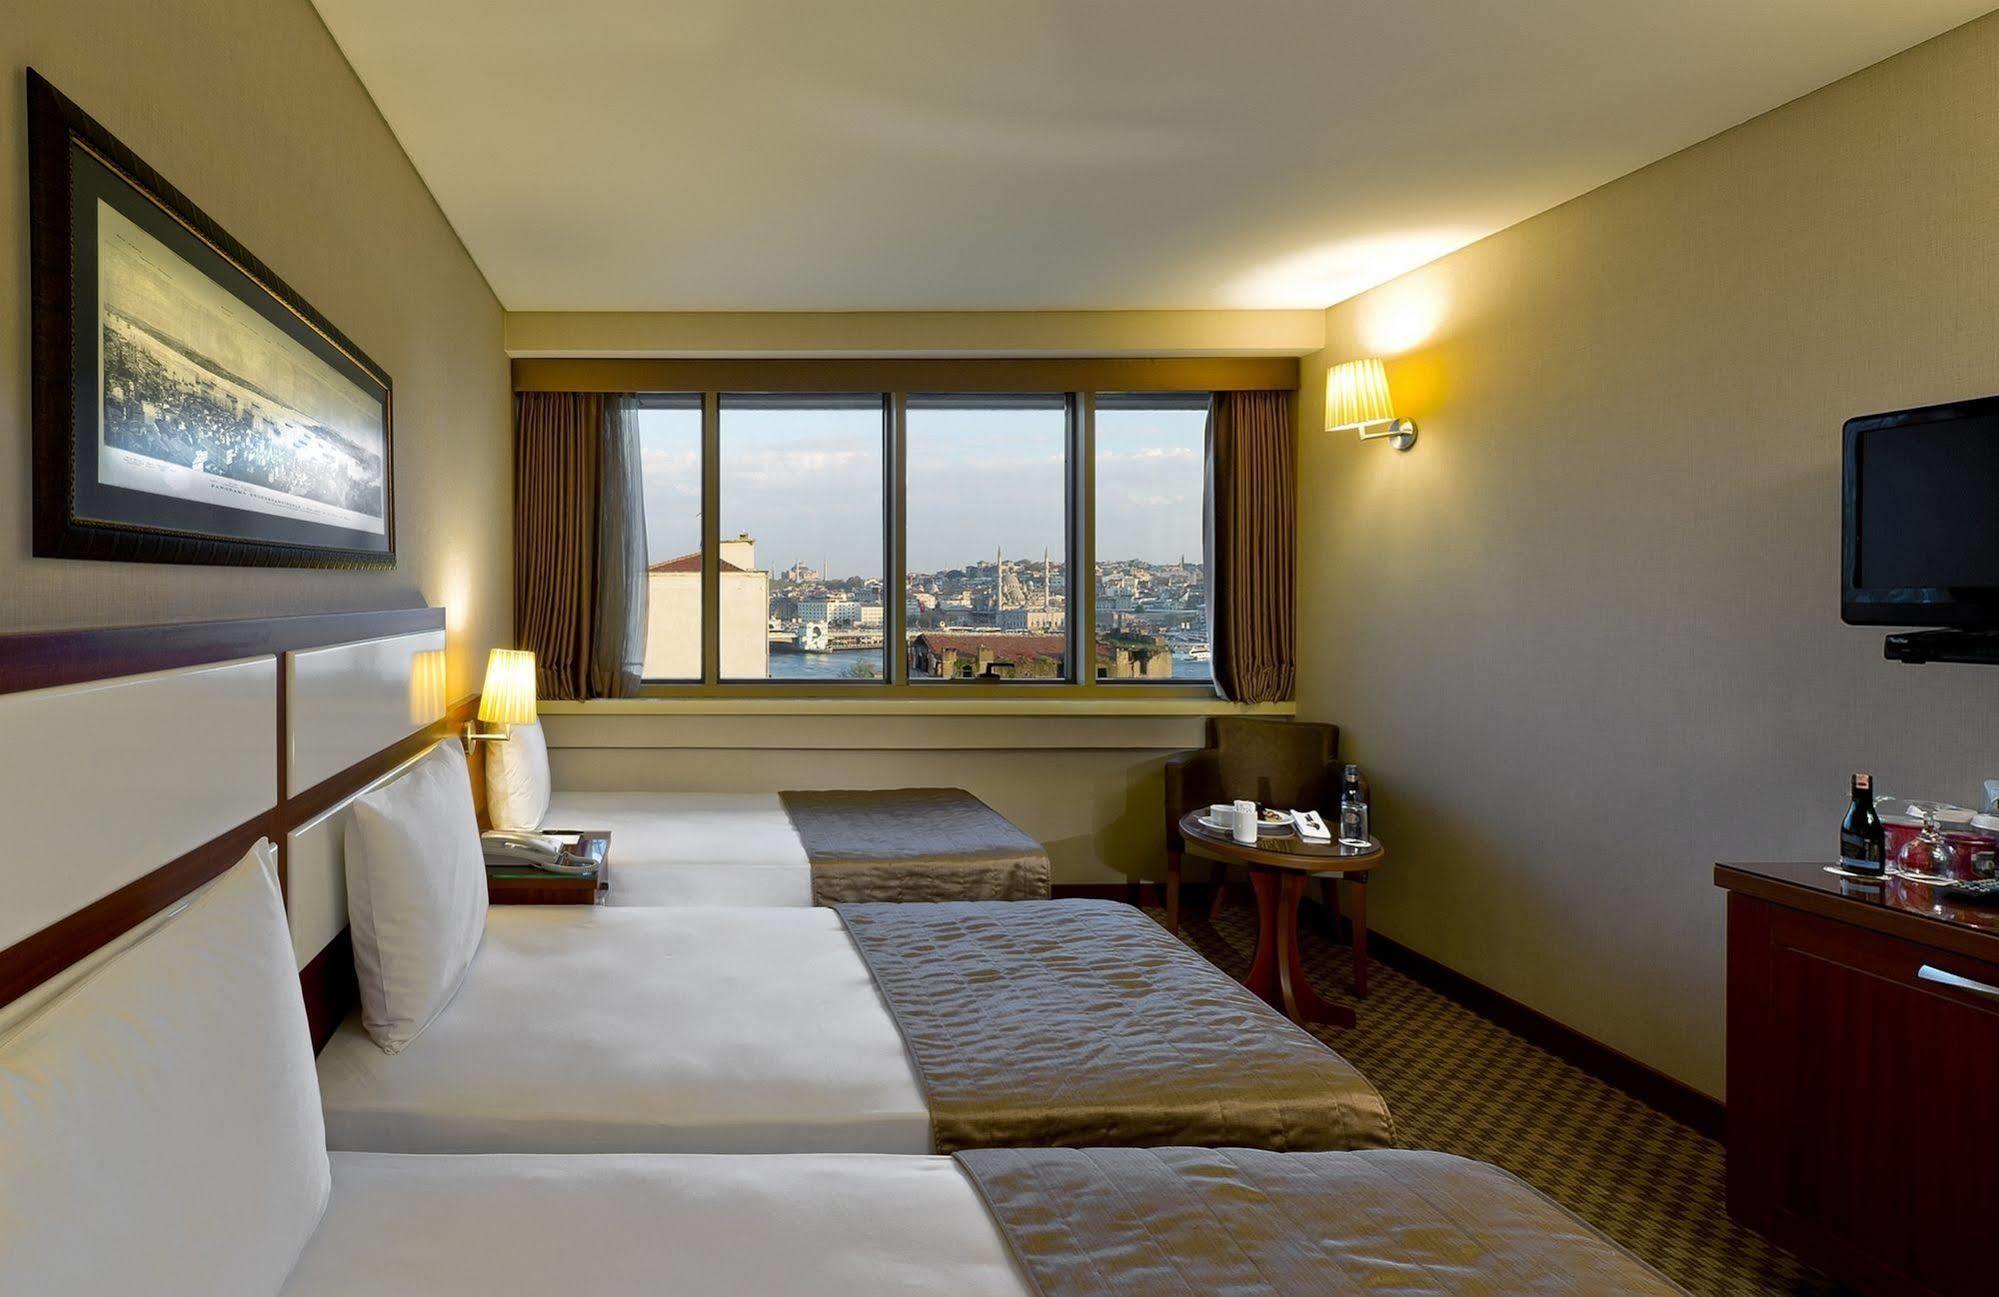 Сити отель стамбул. Отель Istanbul Golden City Hotel. Istanbul Golden City Hotel Стамбул. Отель в Турции голденсити Хотель. Hotel Megaron 3* (Султанахмет (Стамбул)).